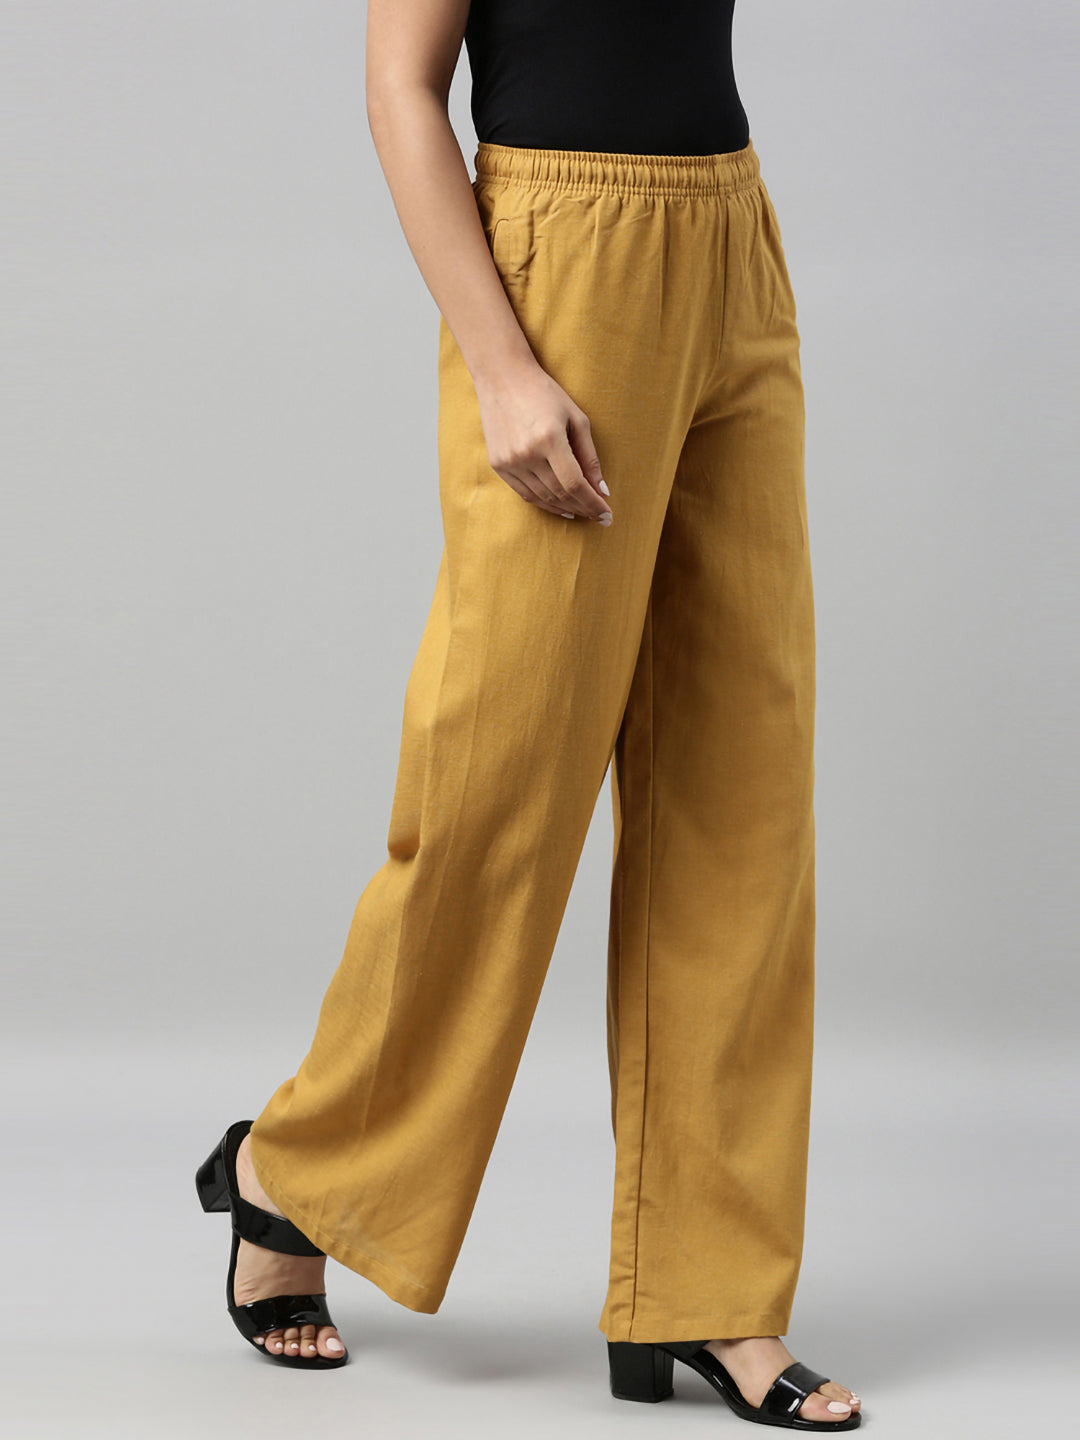 Forever 21 Women's Straight-Leg Trouser Pants Yellow | CoolSprings Galleria